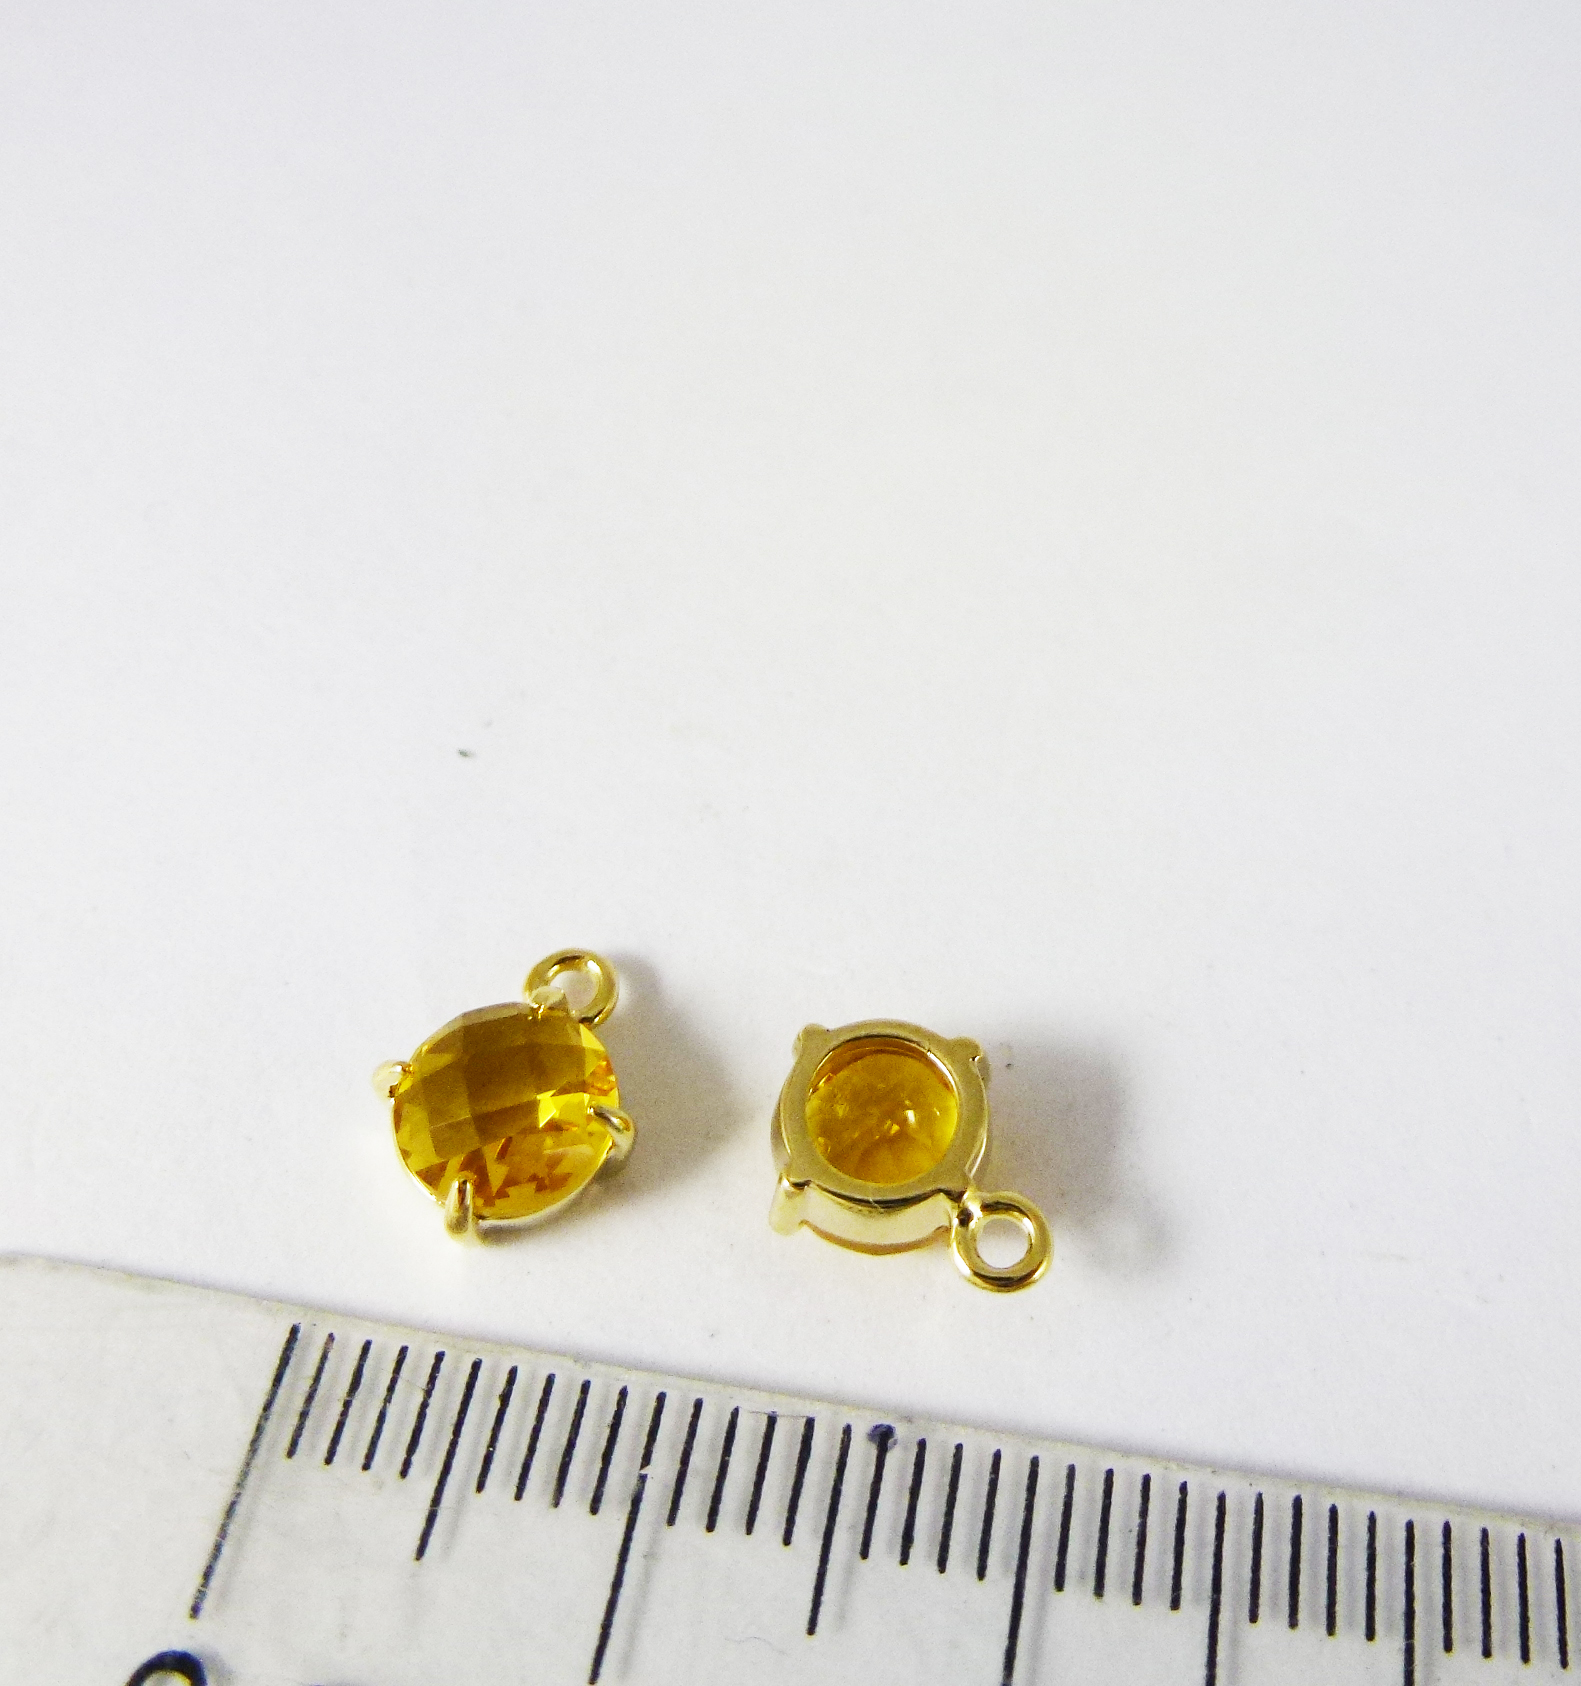 6mm銅鍍金色單孔四爪圓形誕生石-十一月黃水晶